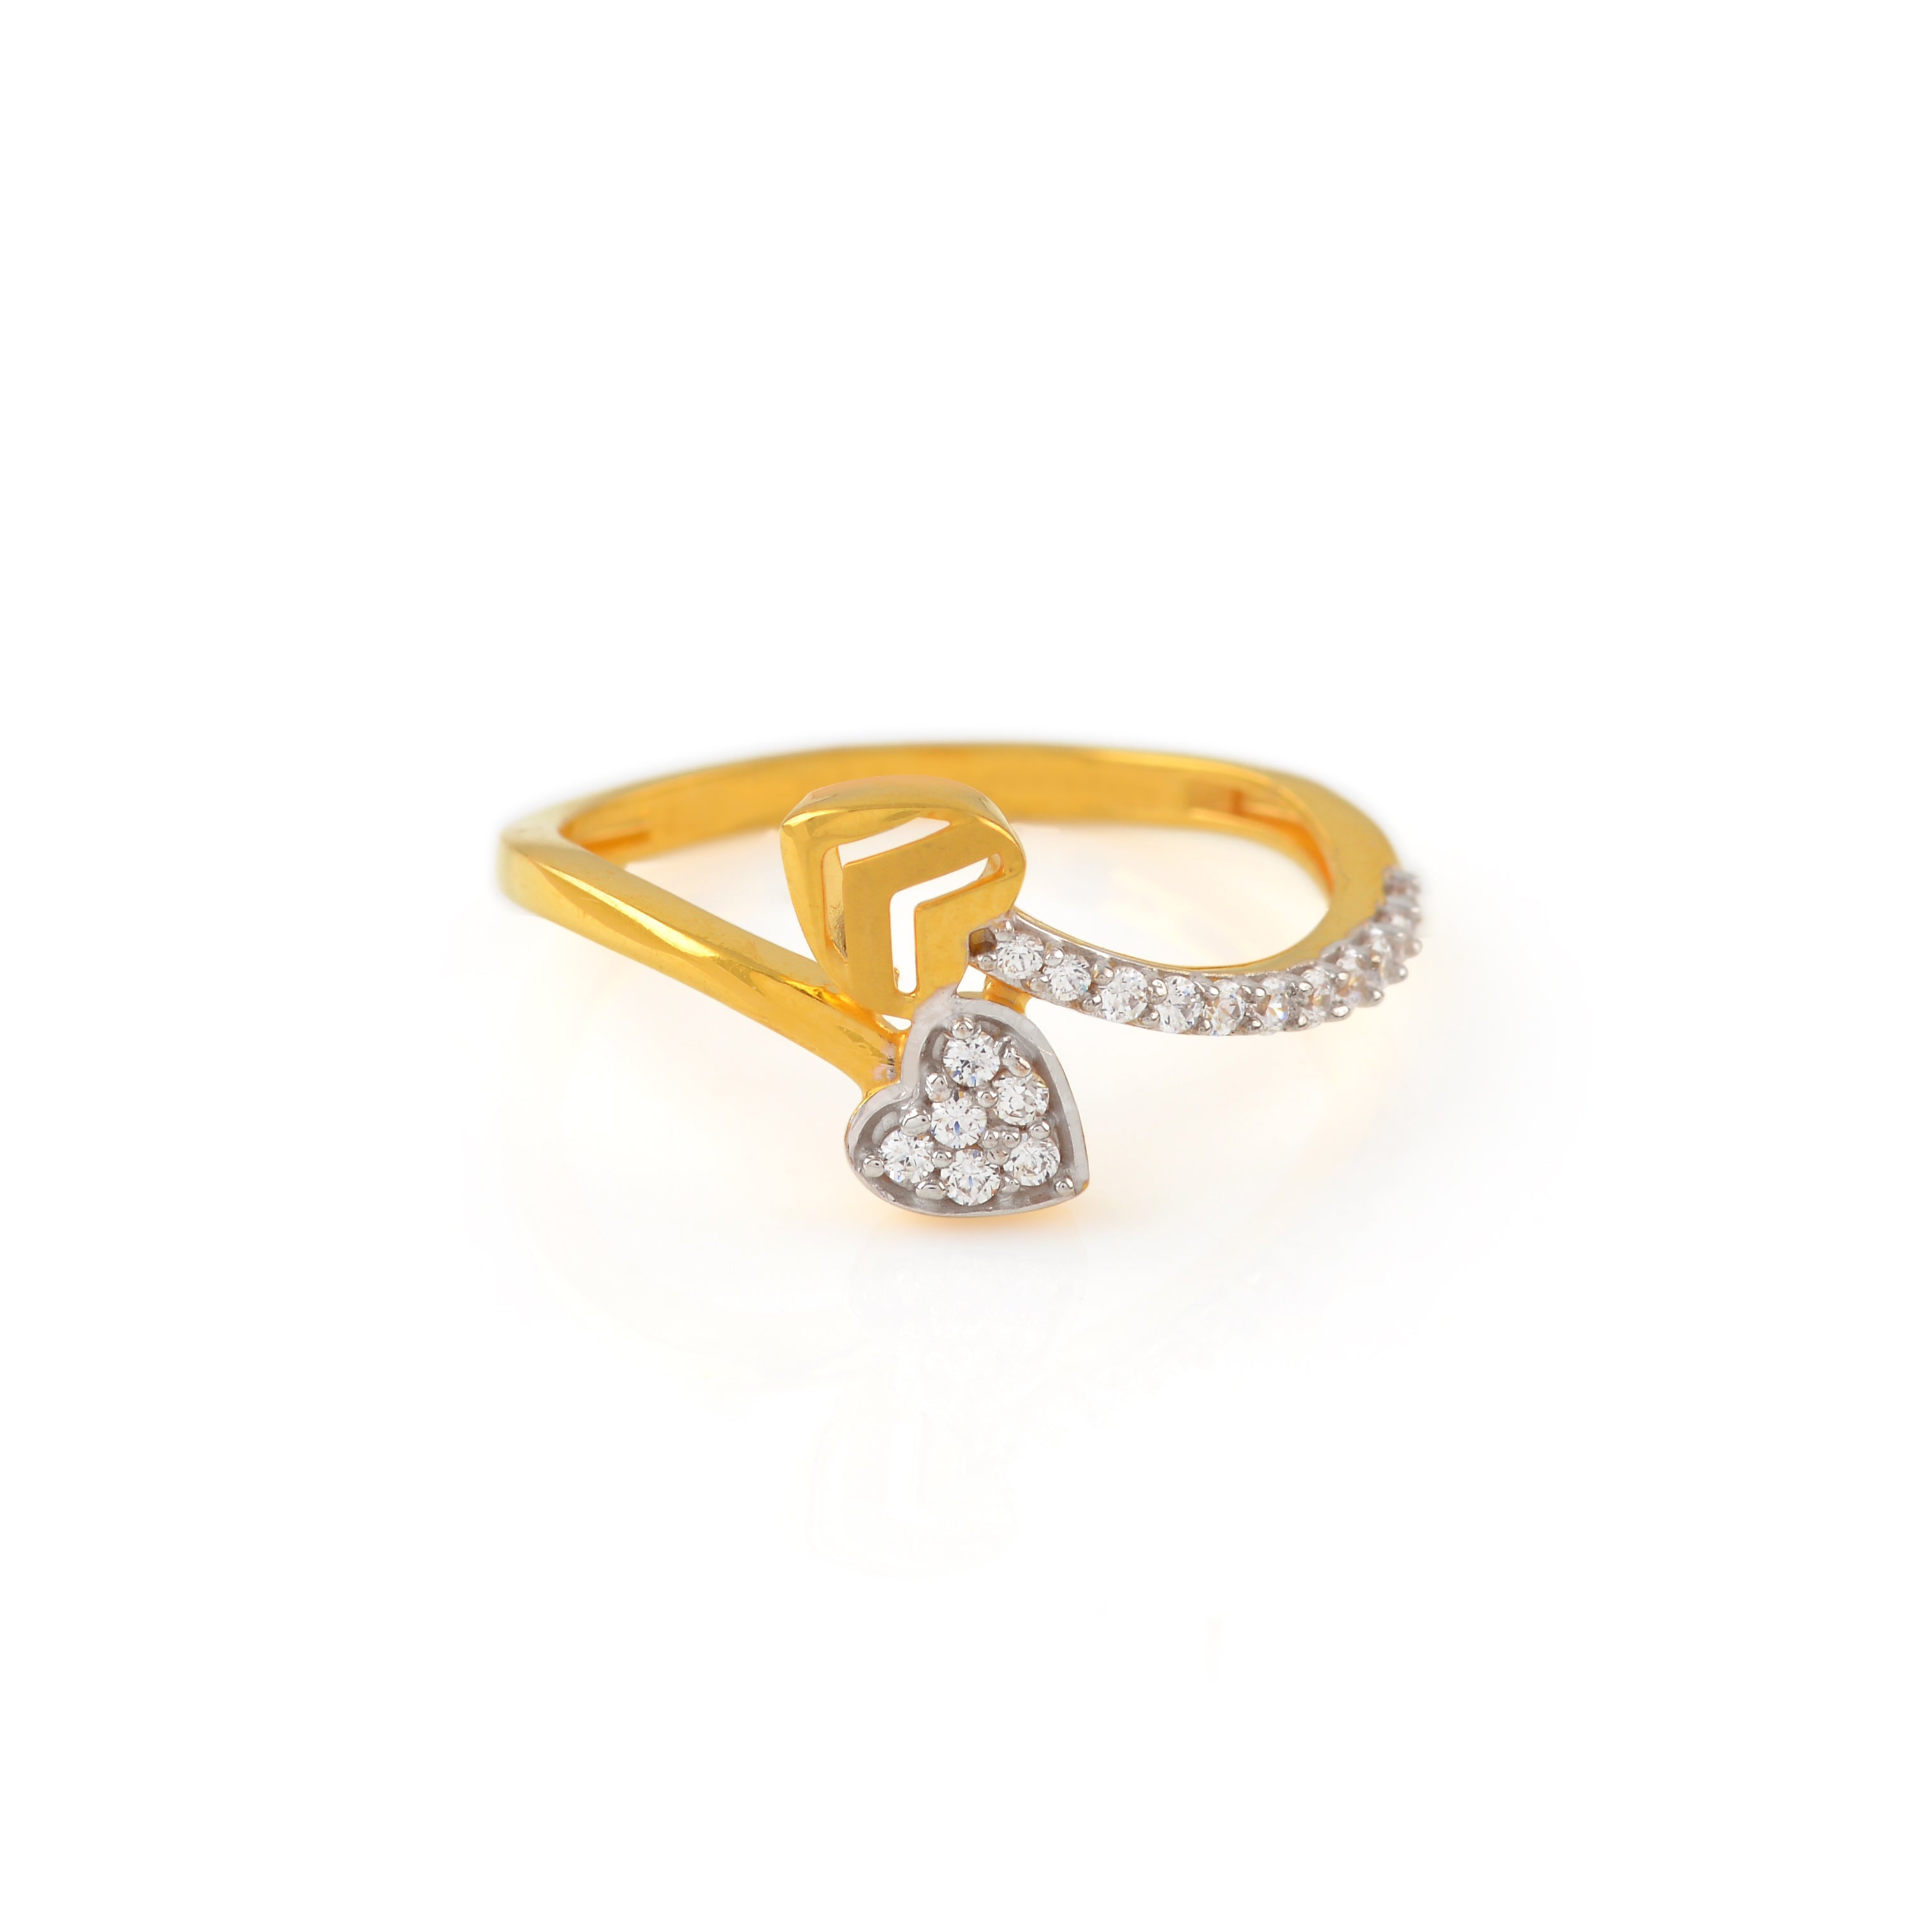 Buy Gold Rings For Women | Ladies gold ring design